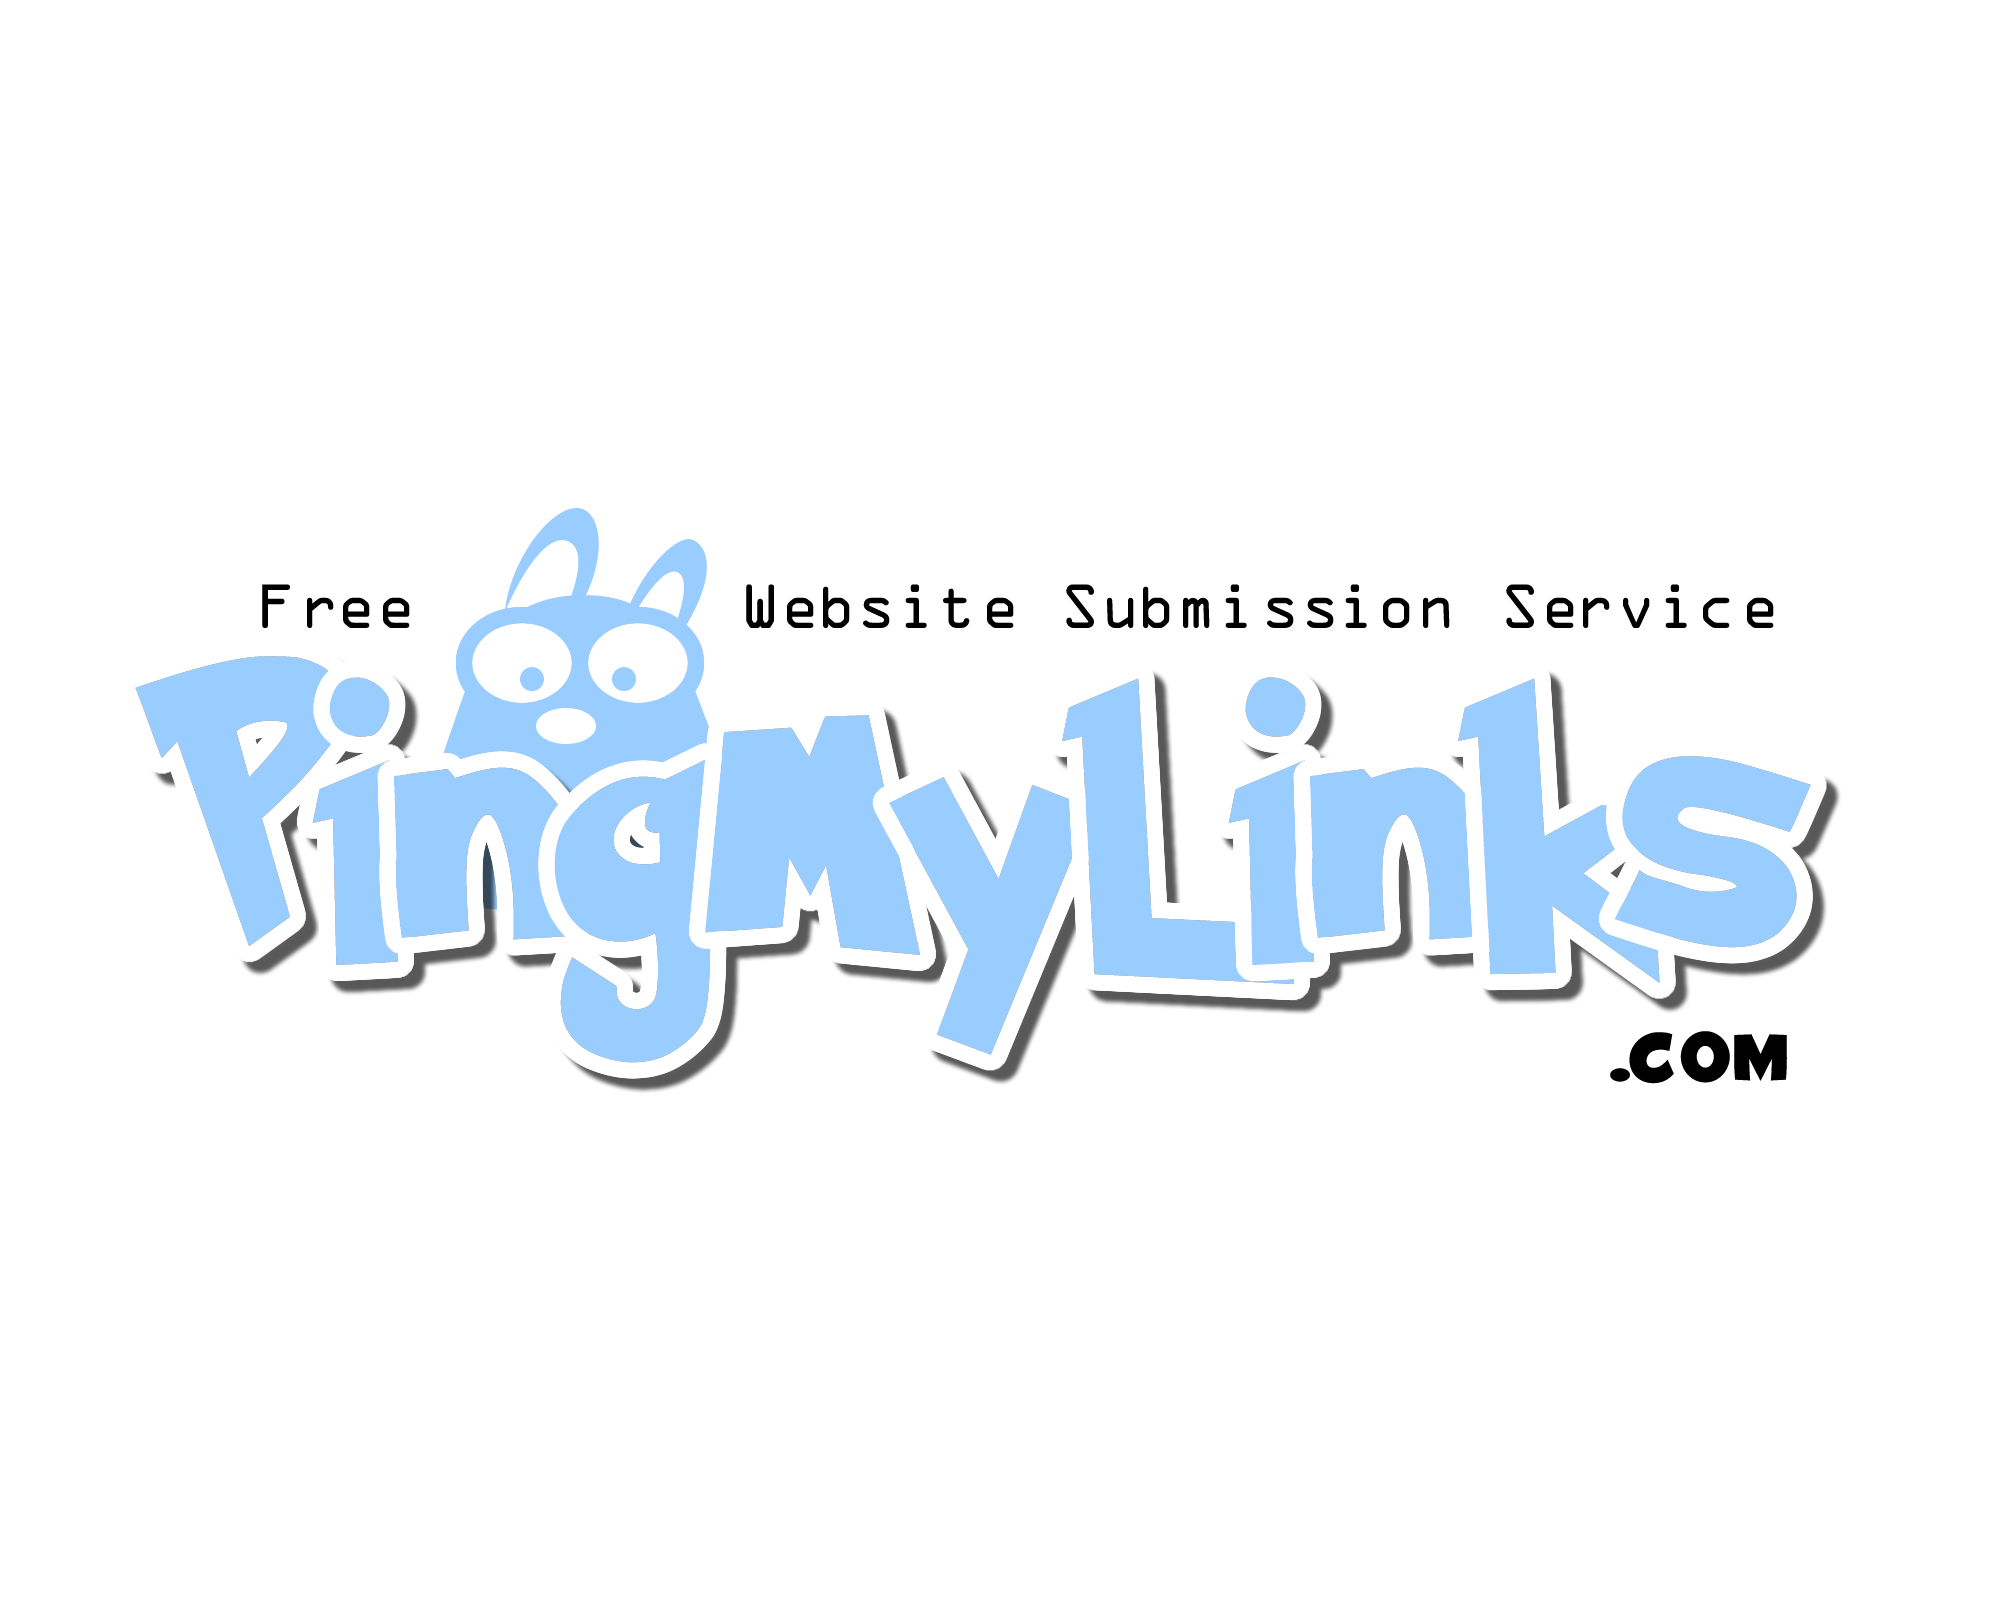 (c) Pingmylinks.com